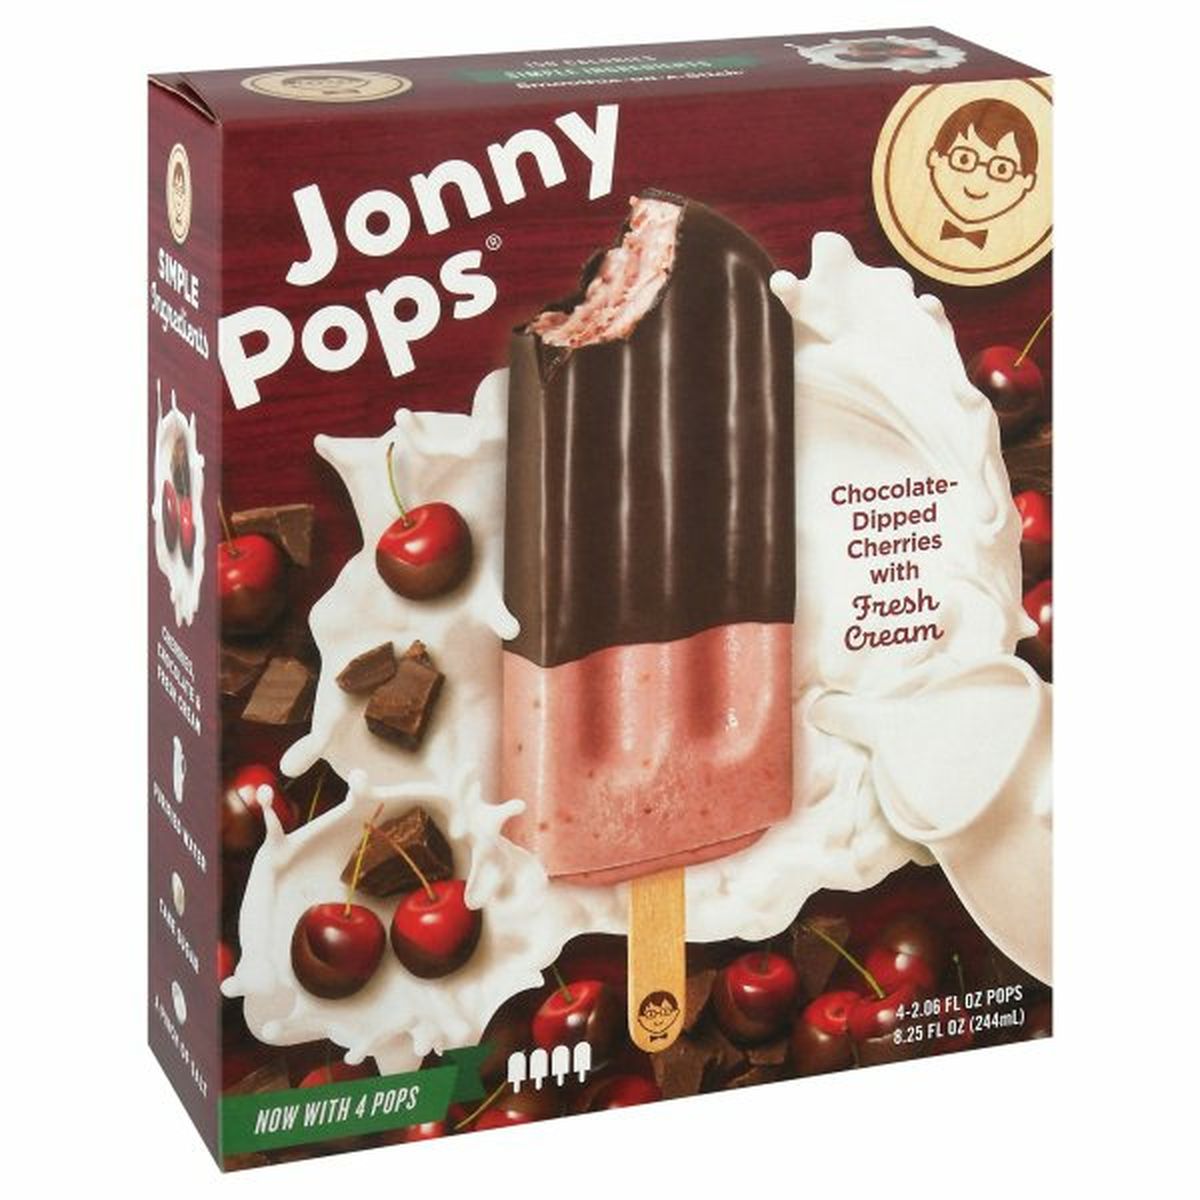 Calories in JonnyPops Pops, Chocolate-Dipped Cherries